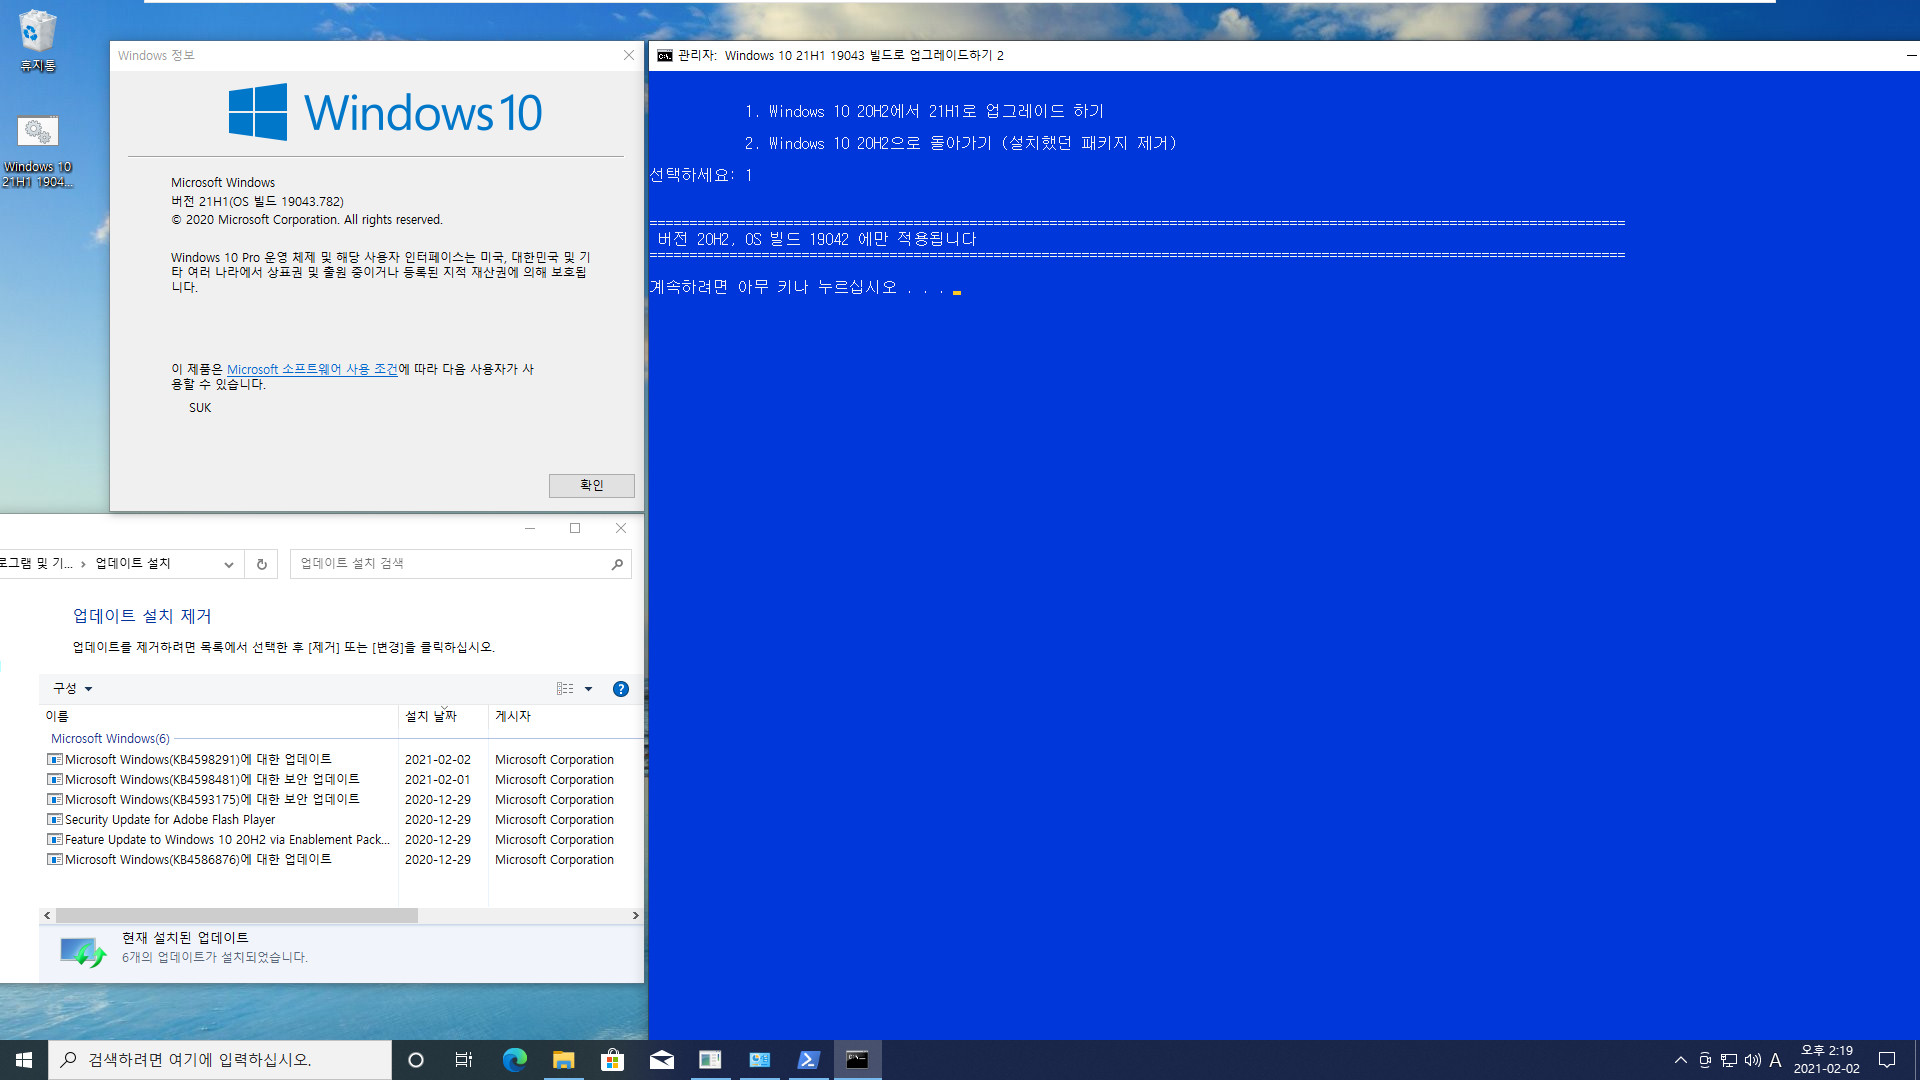 Windows 10 21H1 19043 빌드로 업그레이드하기2.bat 테스트 - 21H1 업그레이드 후에 새 누적 업데이트 설치하려면, 21H1 제거한 후에 새 누적 업데이트 설치해야 하네요 2021-02-02_141952.jpg